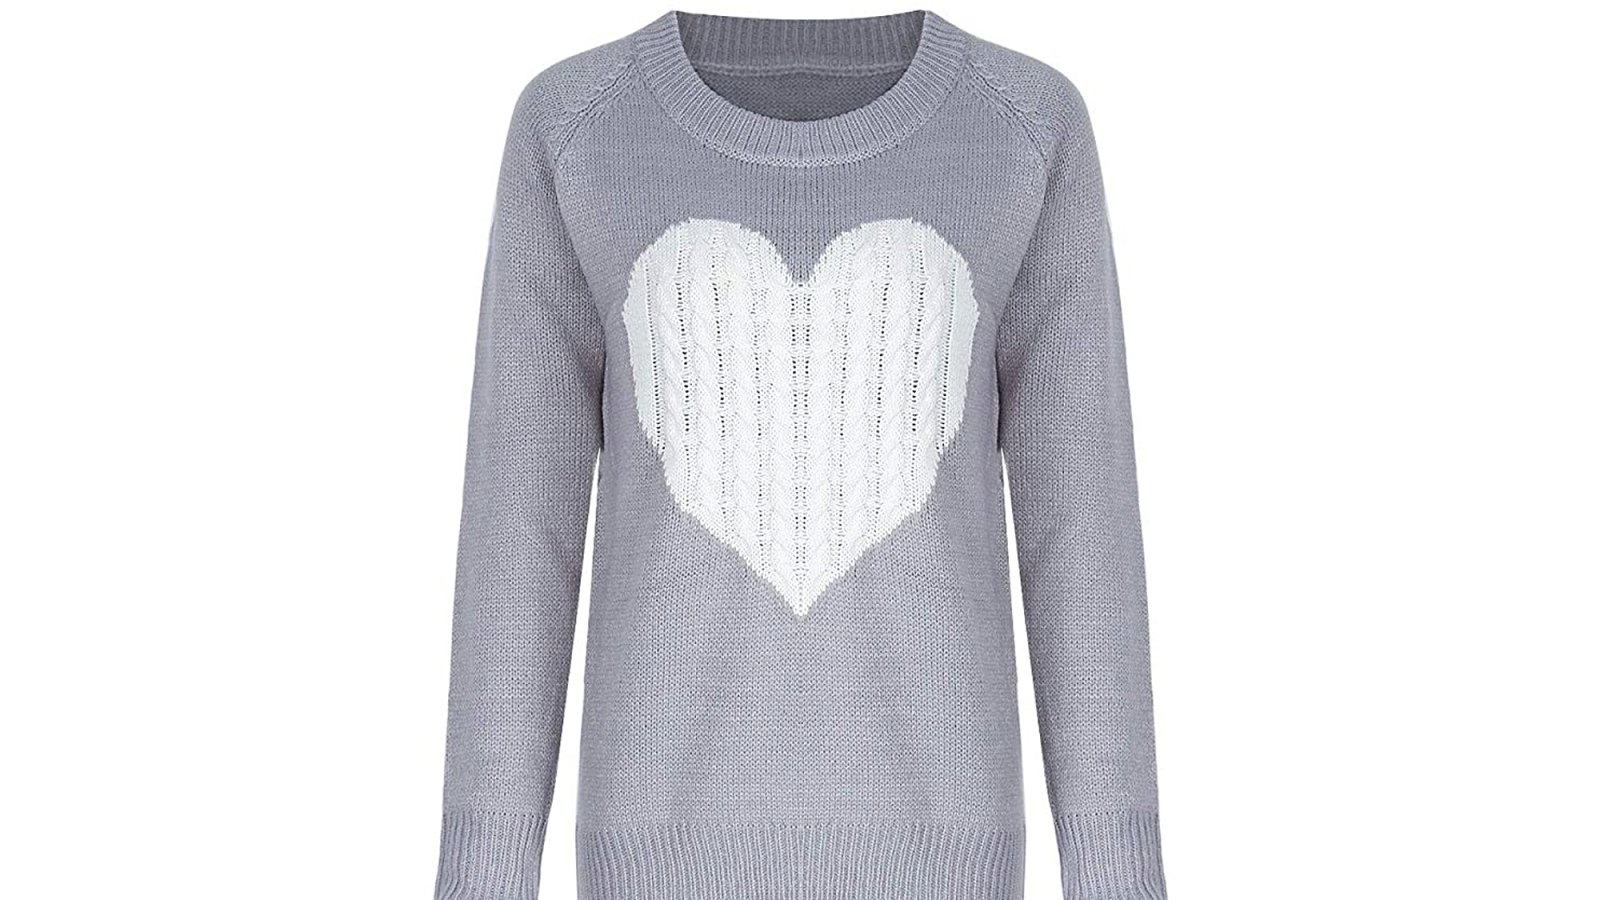 shermie Women's Pullover Long Sleeve Crewneck Heart Knit Sweater